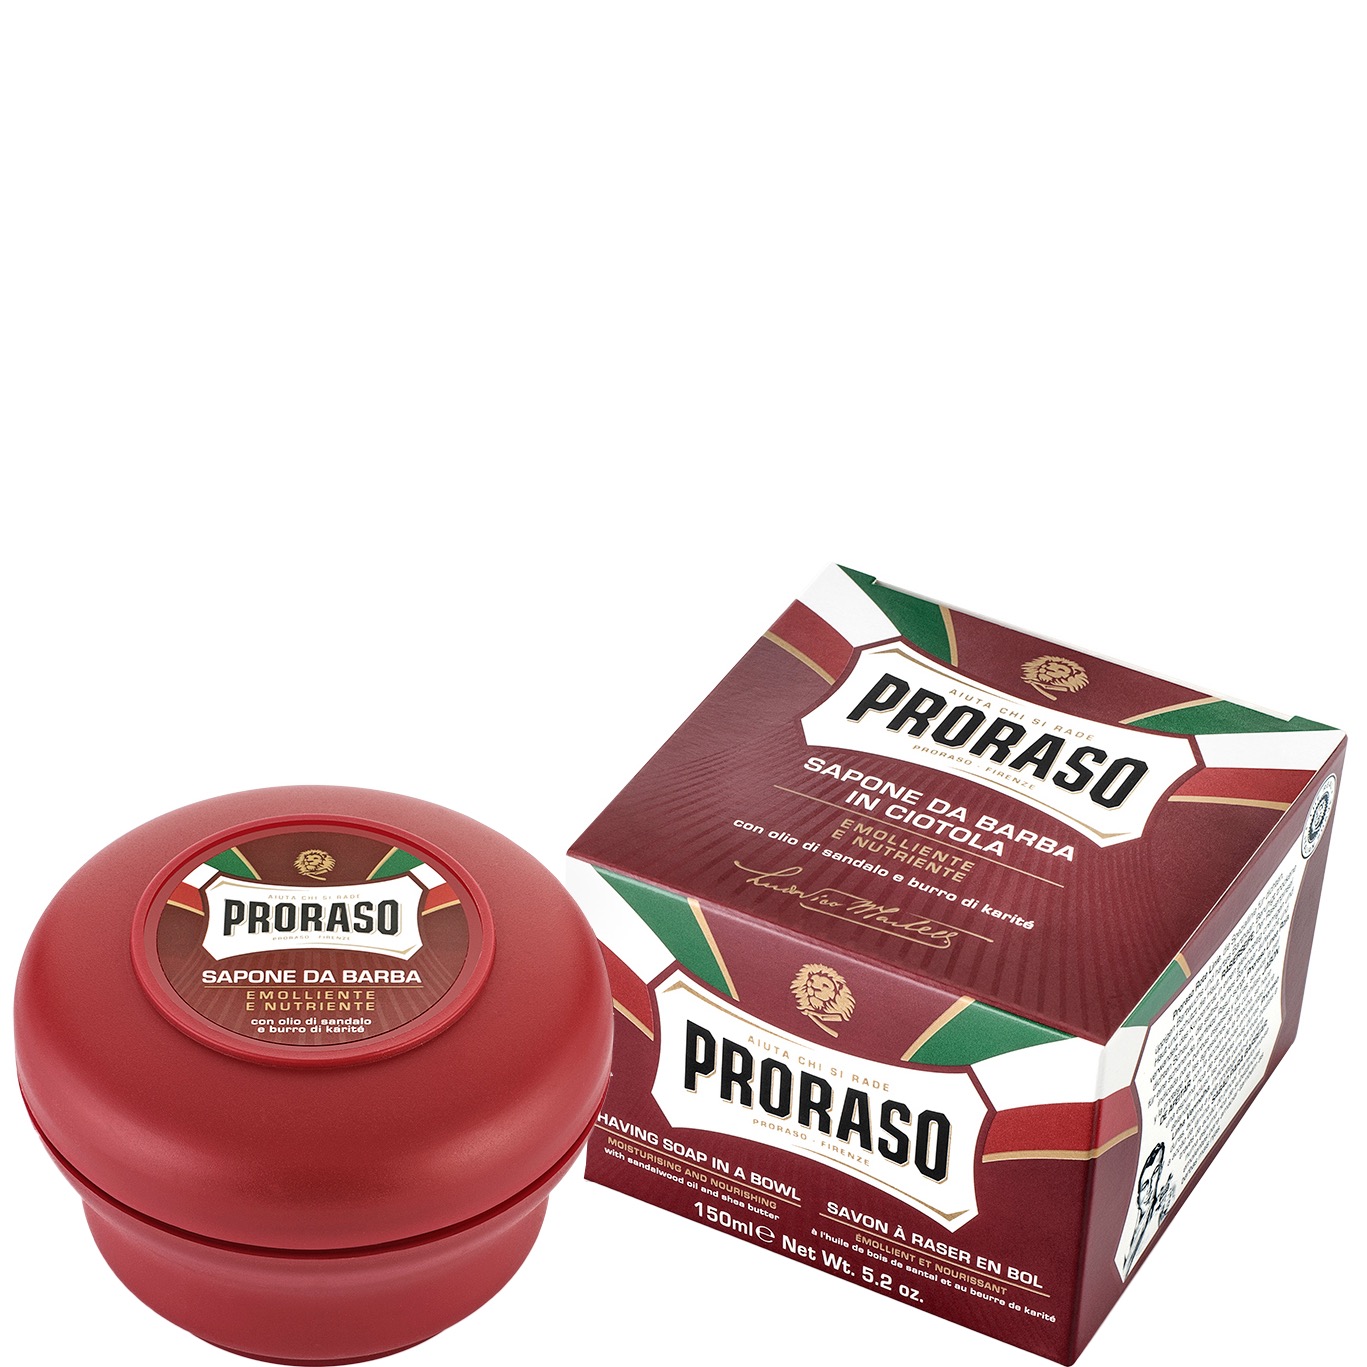 Proraso Scheerzeep Traditional pot sandalwood 150ml - 1.1 - PRO-400622